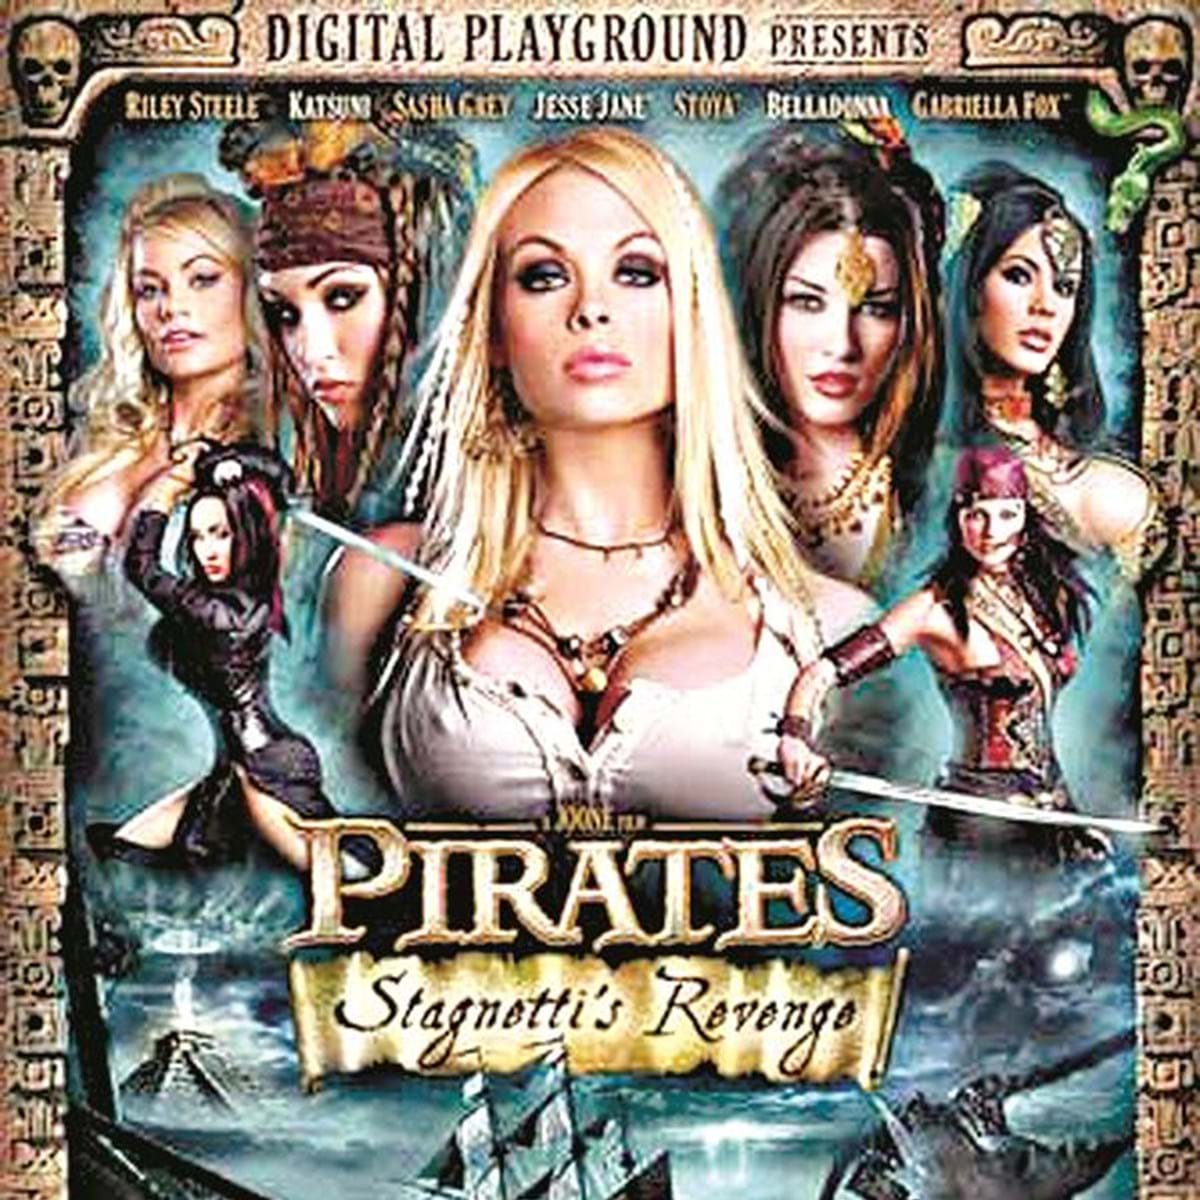 Filme.adulto piratas